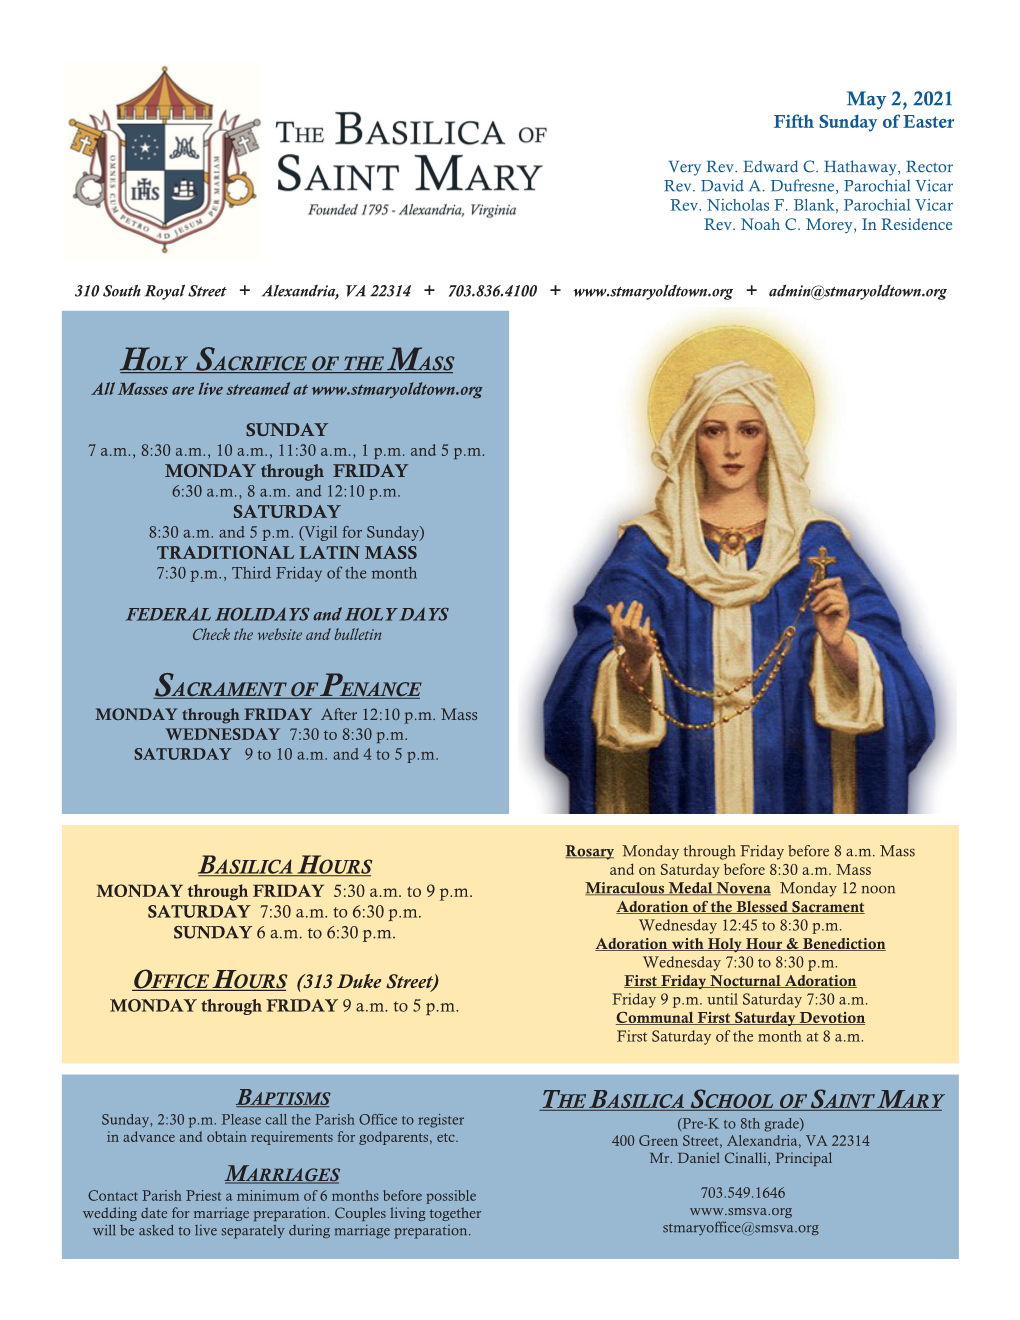 May 2, 2021 HOLY SACRIFICE of the MASS SACRAMENT OF